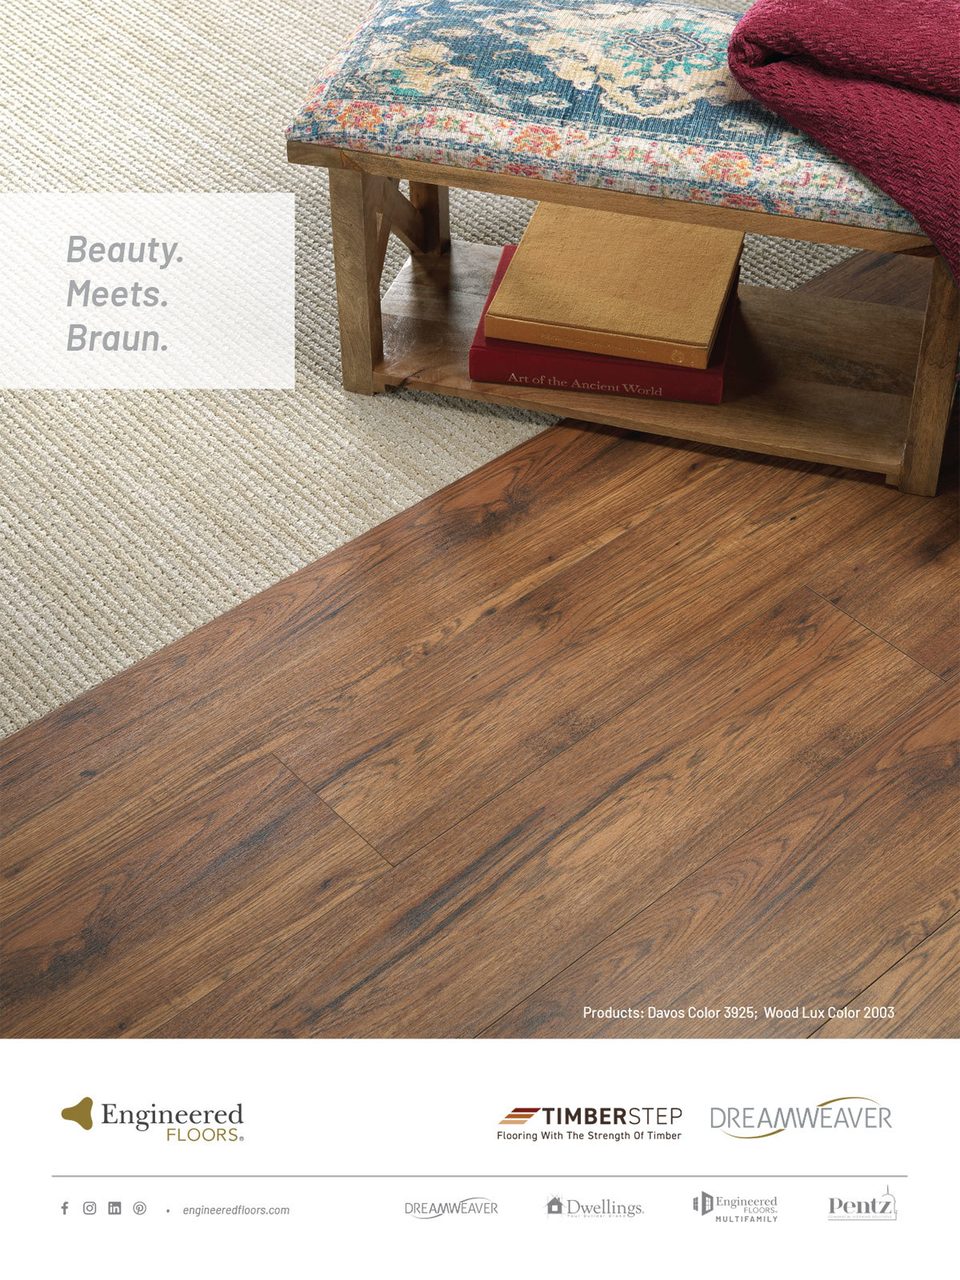 Wood stain, Brown, Property, Product, Rectangle, Flooring, Floor, Beige, Hardwood